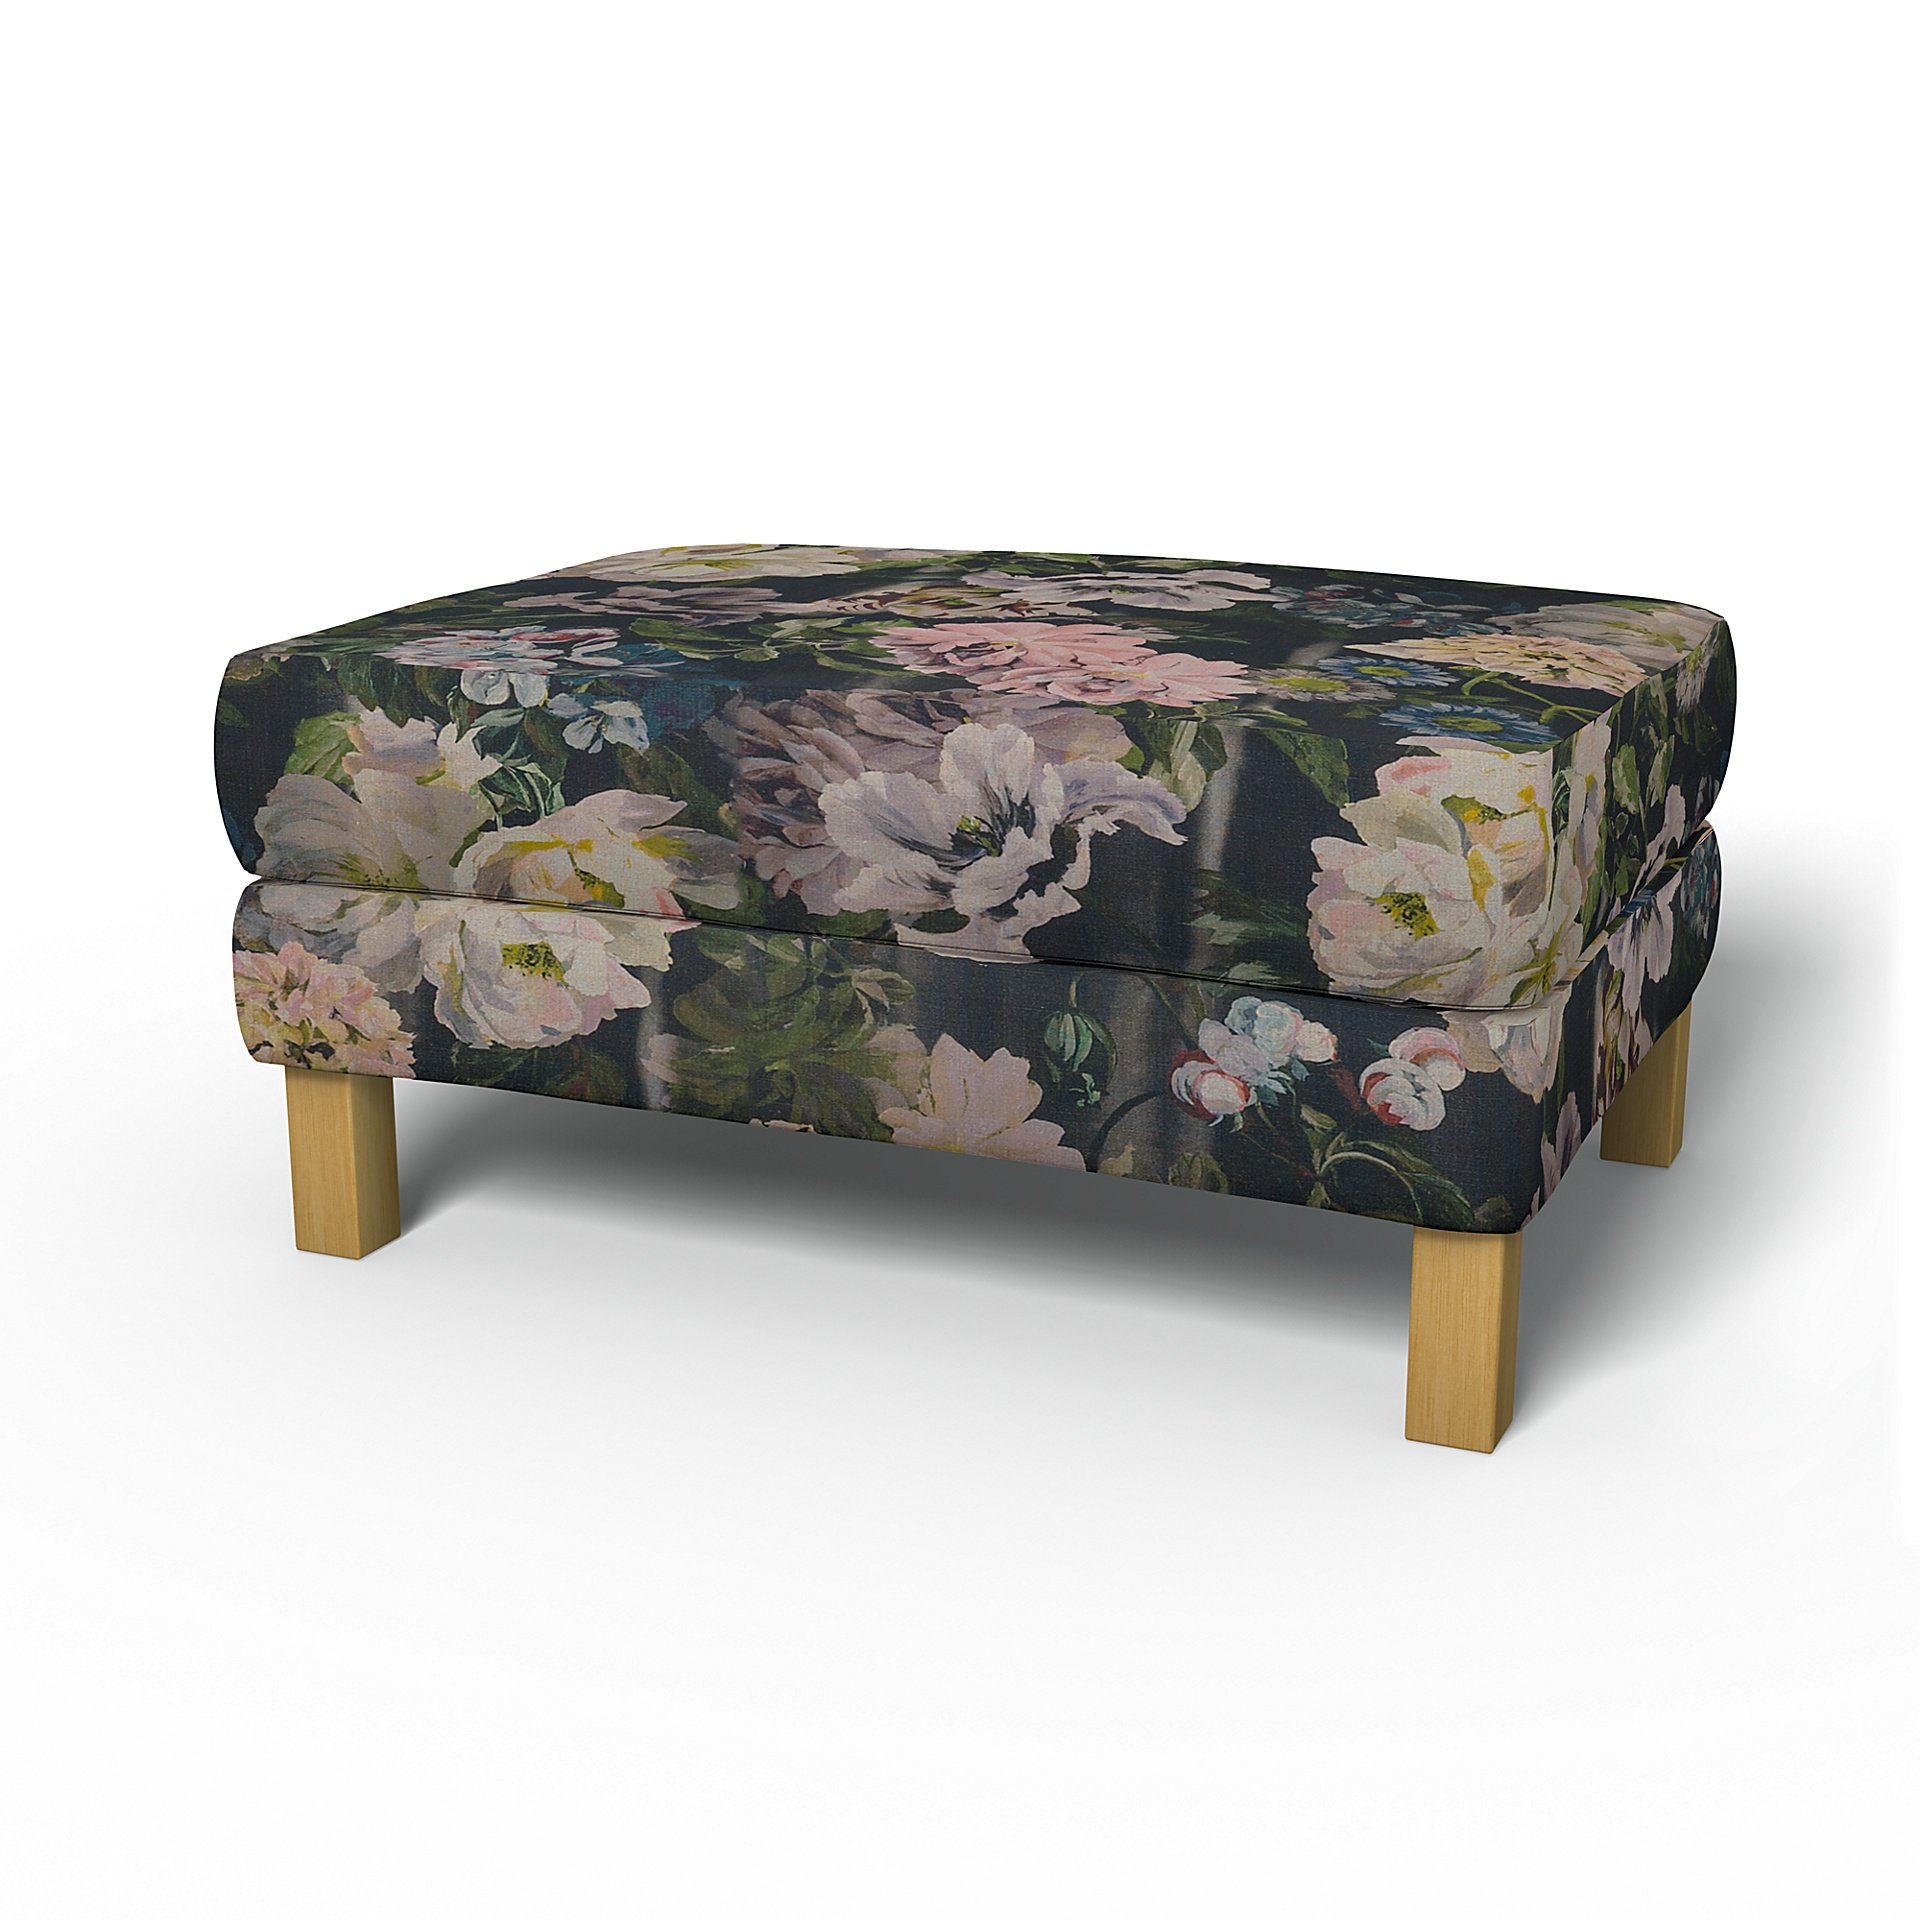 IKEA - Karlstad Footstool Cover, Delft Flower - Graphite, Linen - Bemz